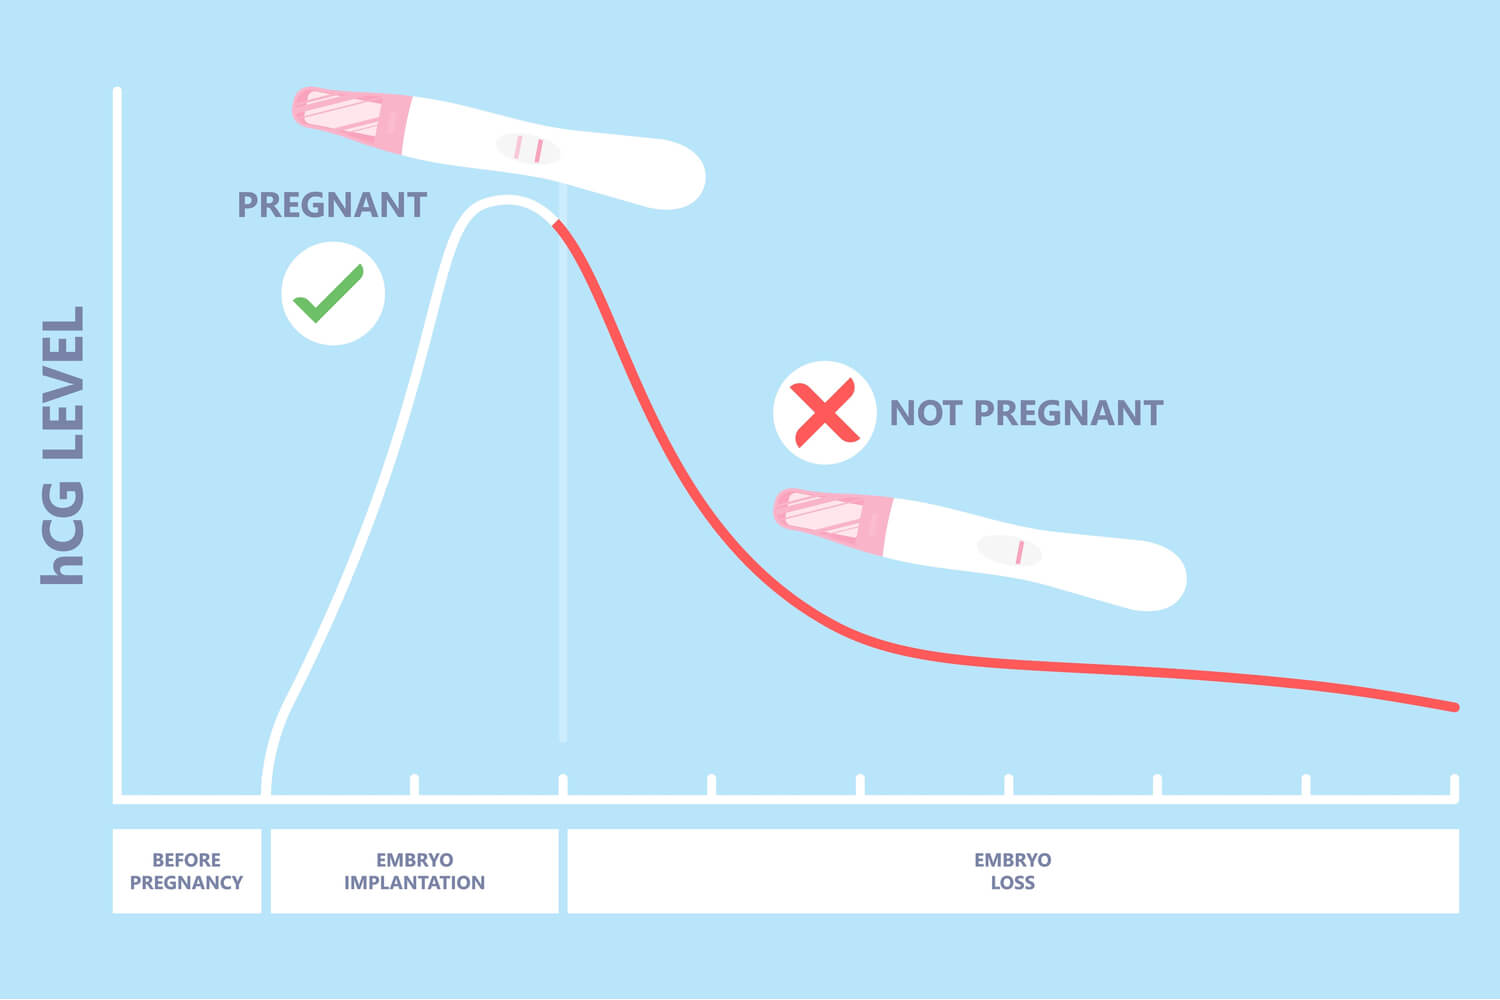 Causes For a False Positive Pregnancy Result